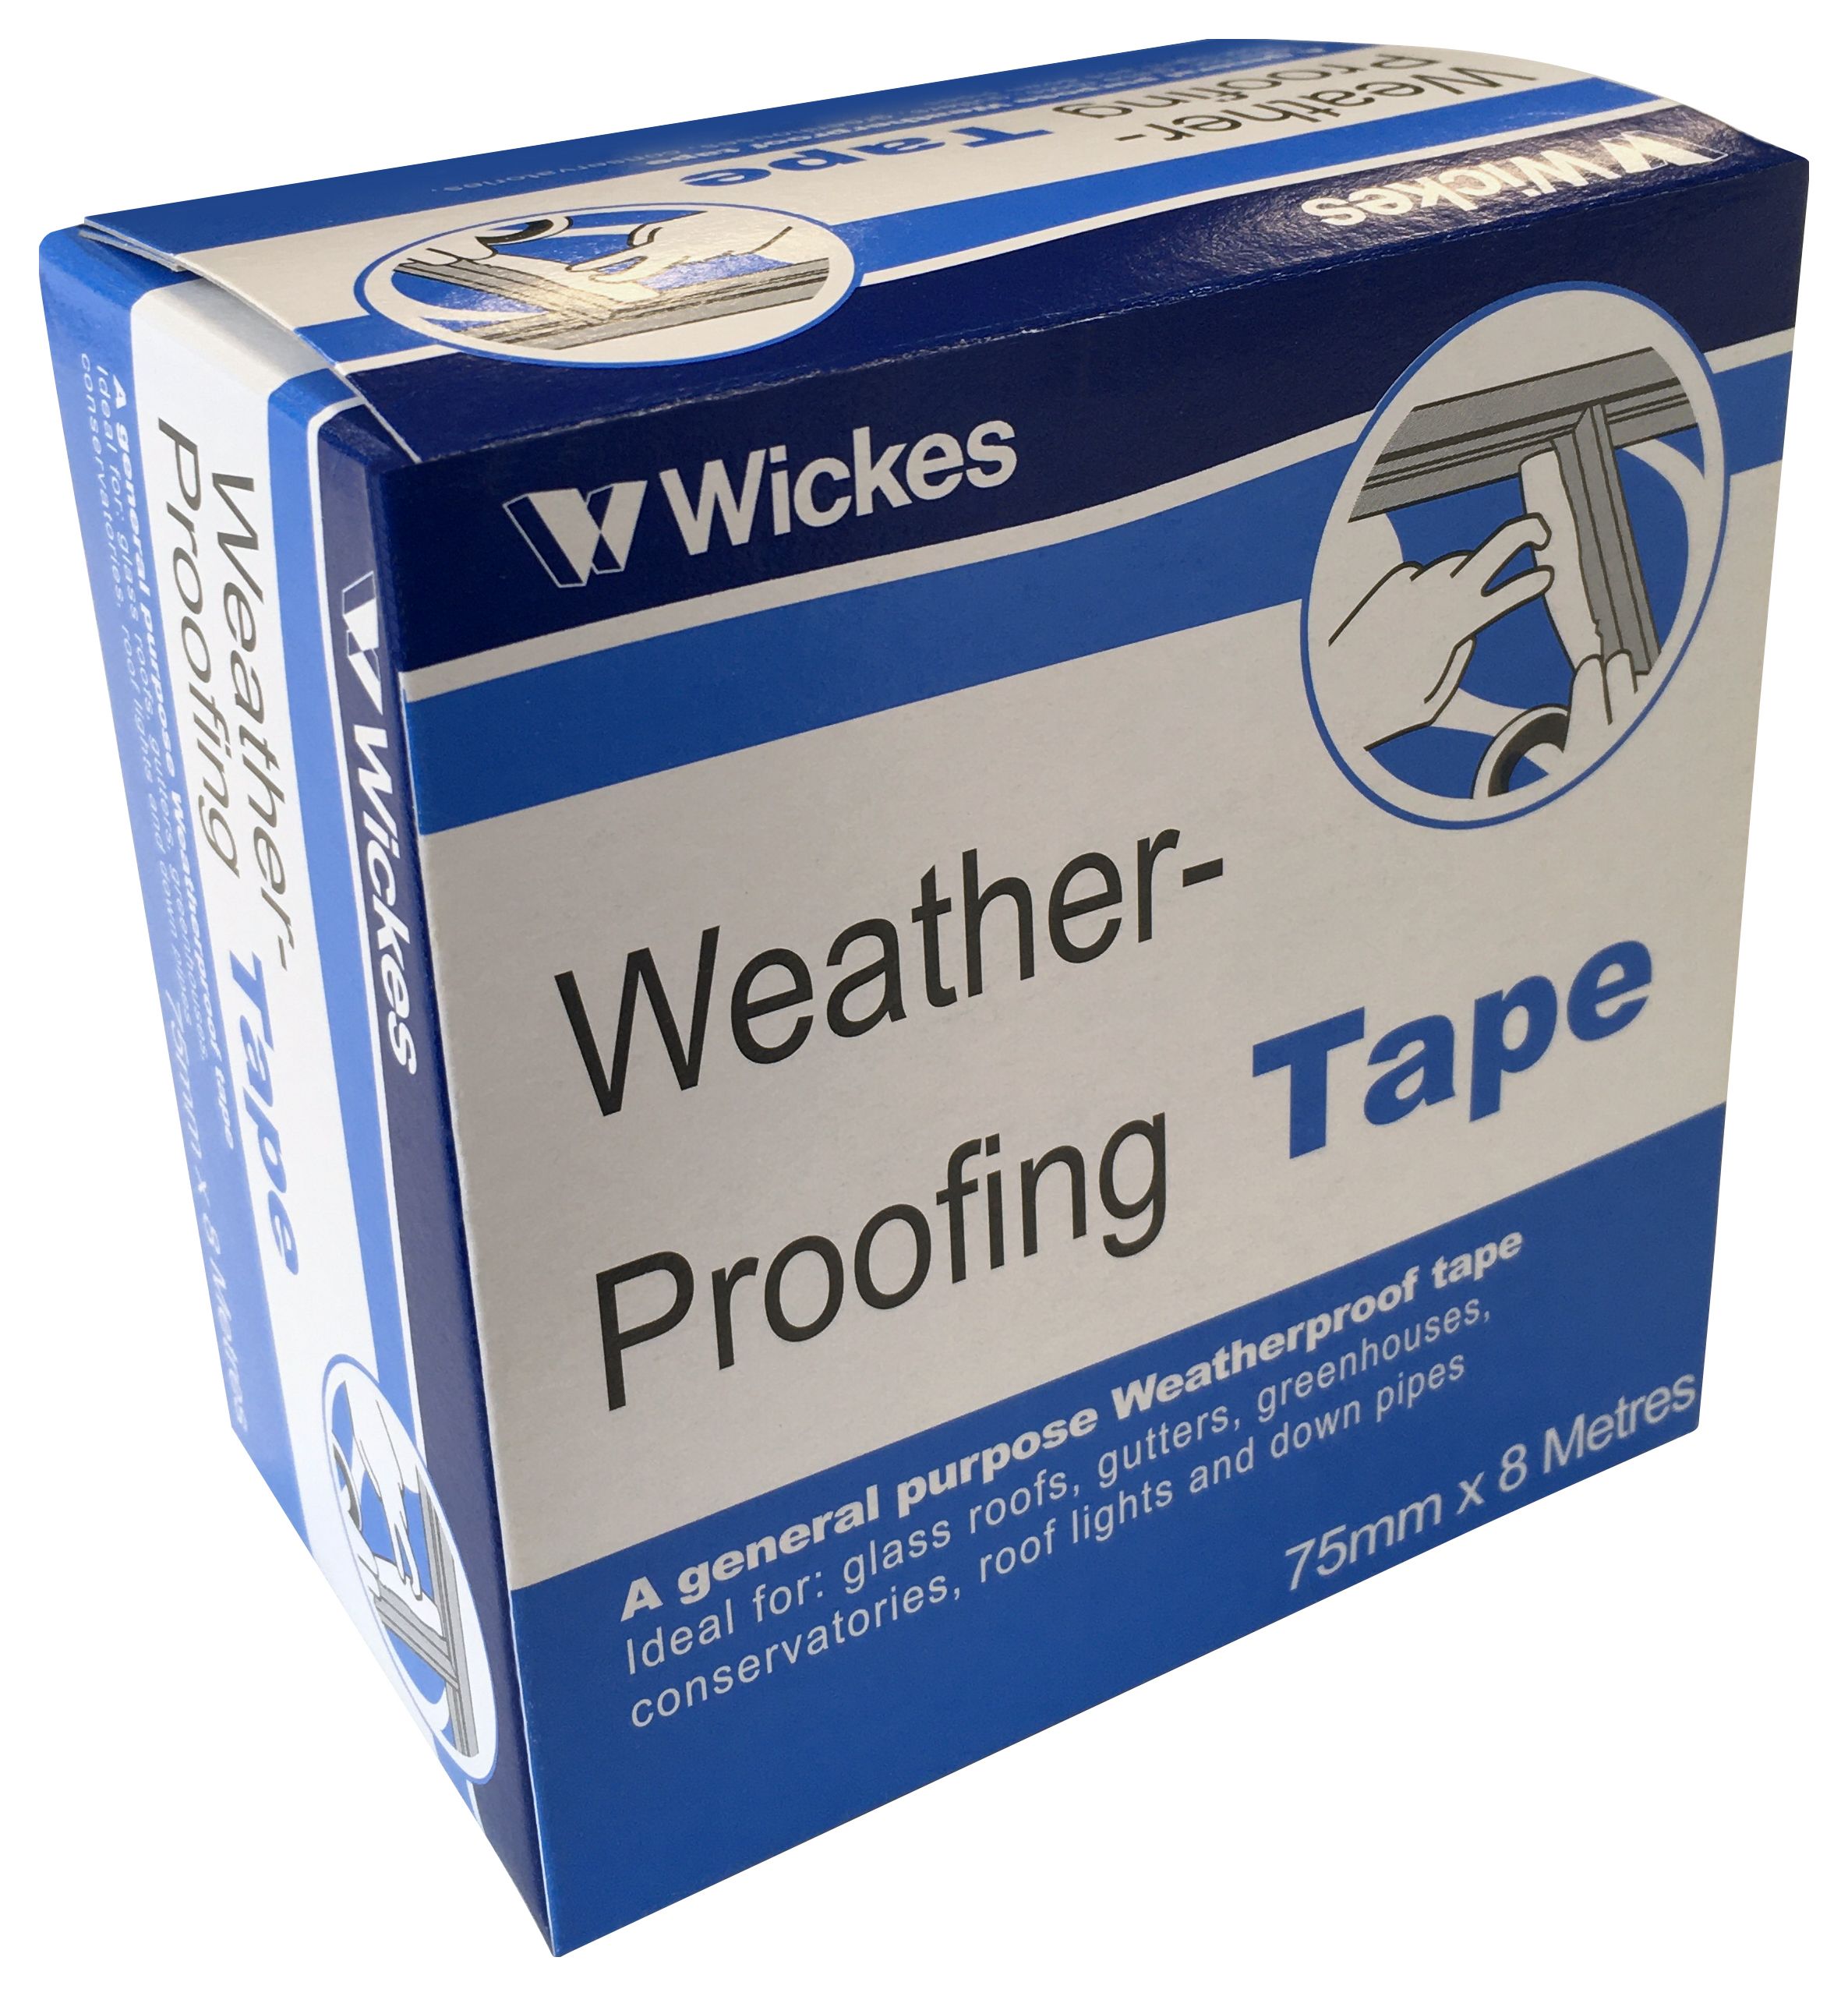 Image of Wickes General Purpose Weatherproofing Tape - 76mm x 8m